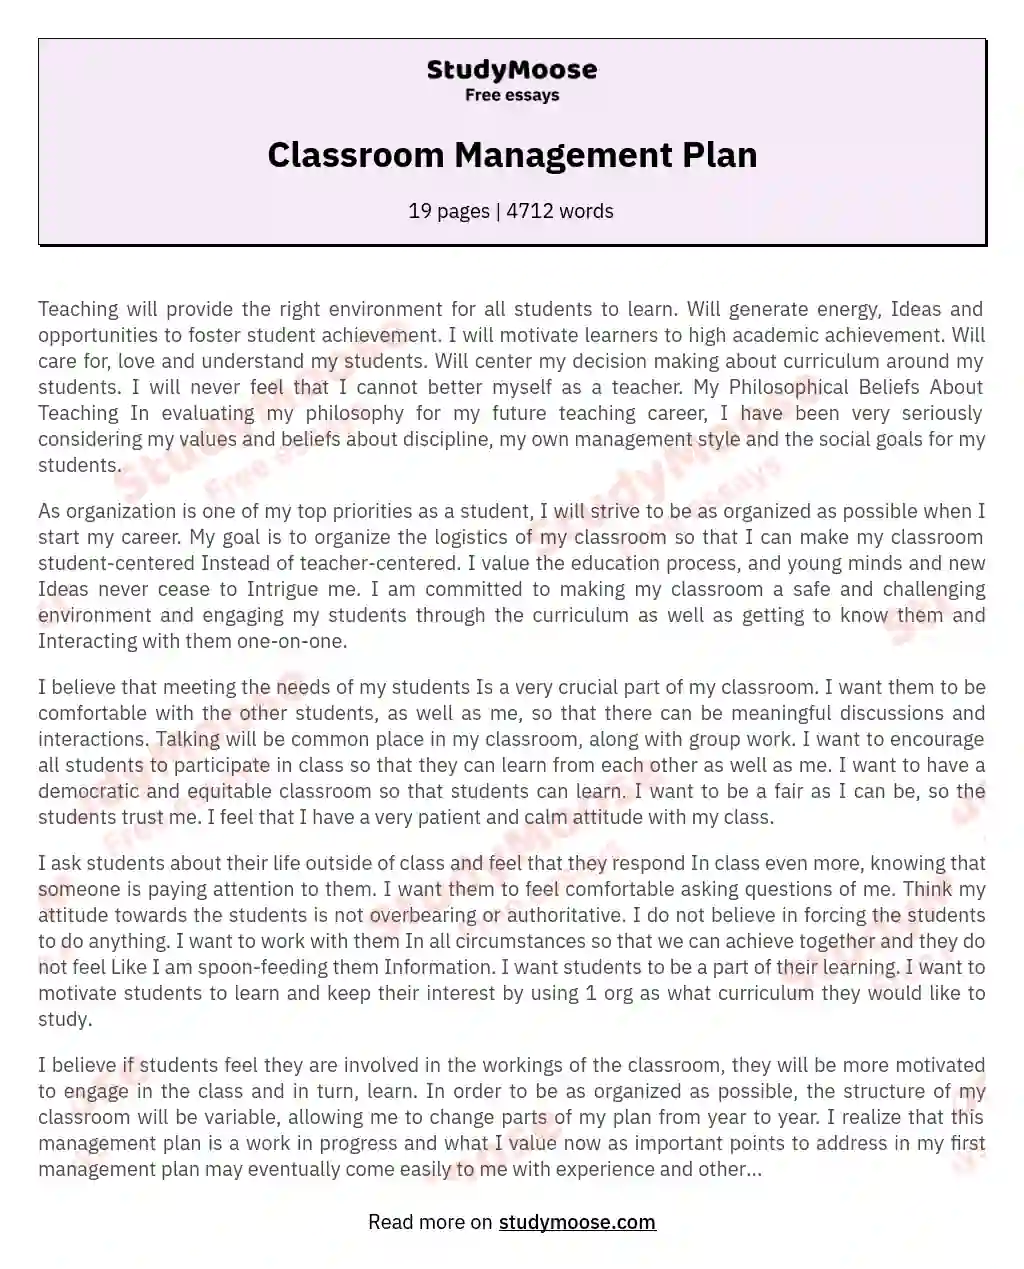 Classroom Management Plan essay